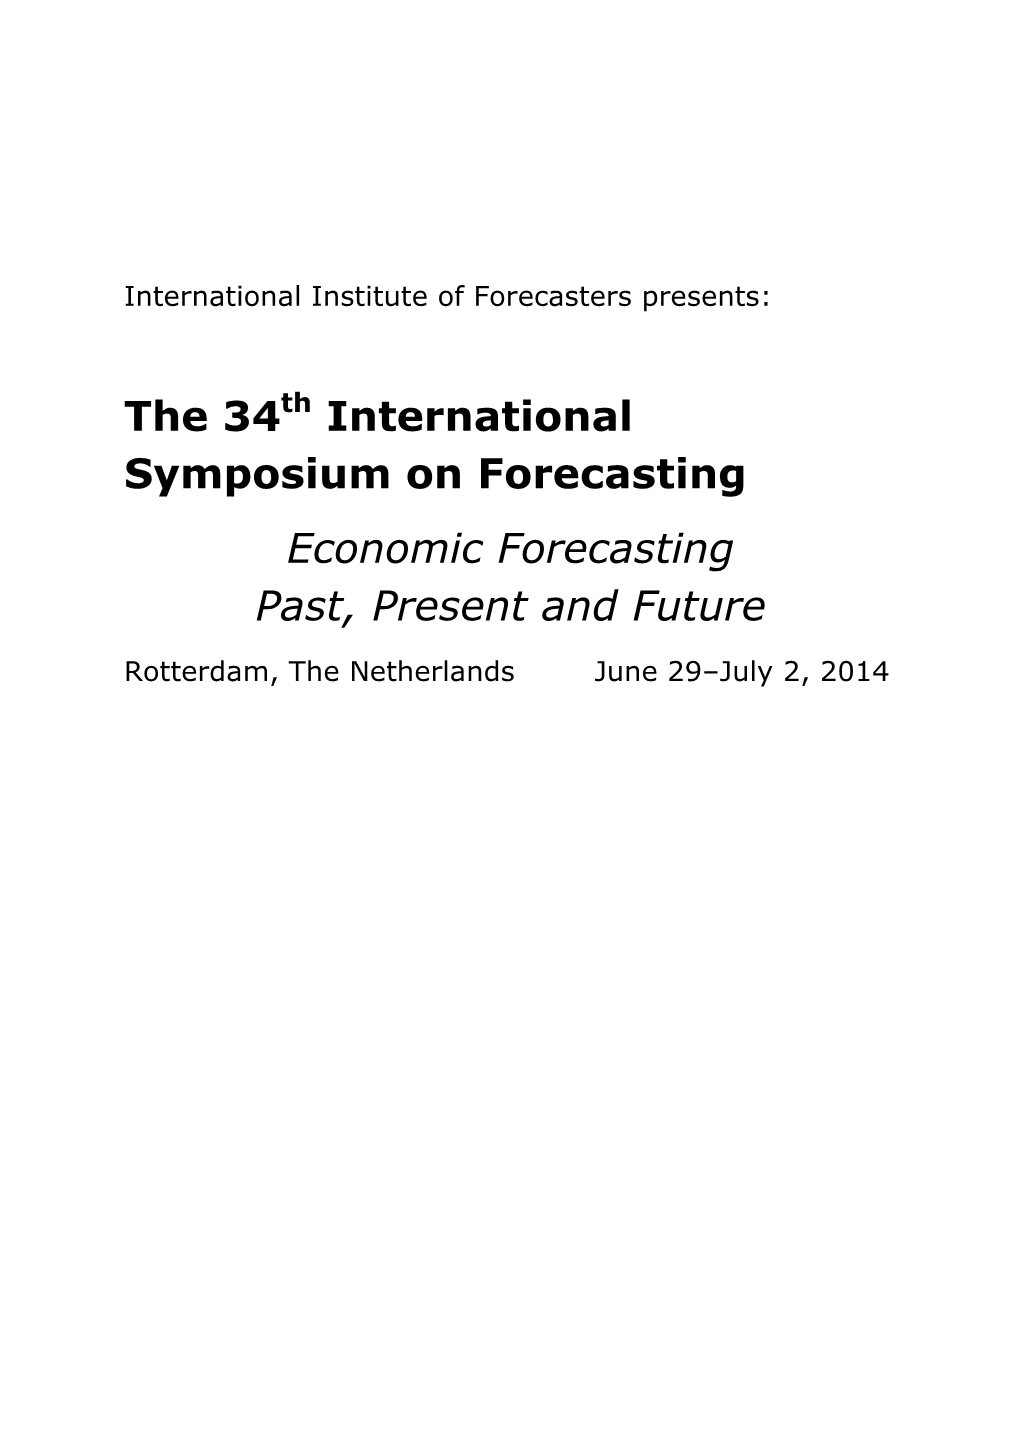 The 34Th International Symposium on Forecasting Economic Forecasting Past, Present and Future